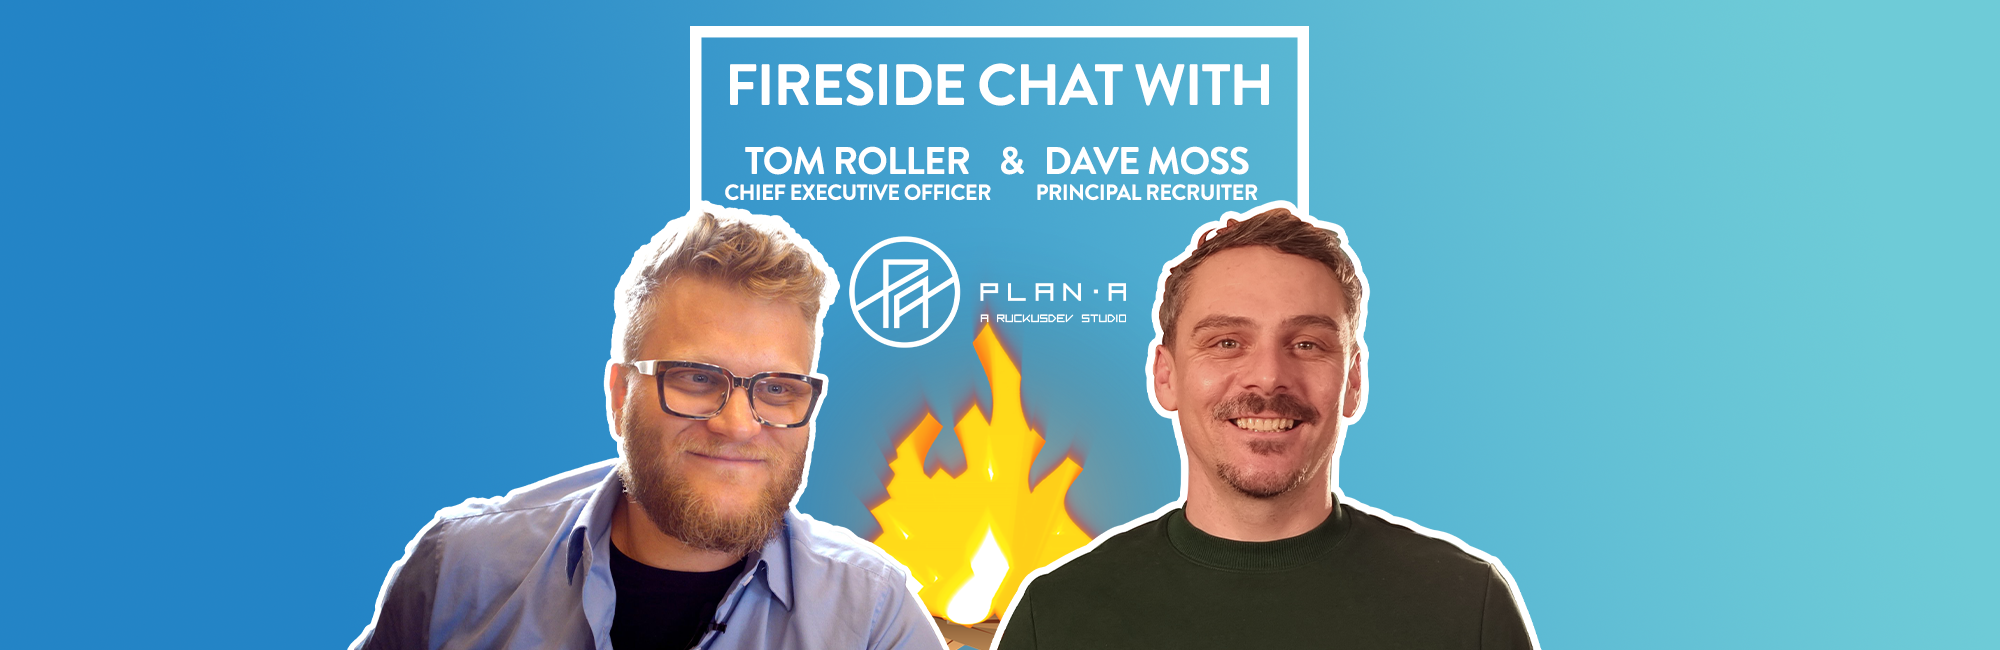 Fireside Chat   Tom Roller   Plan A